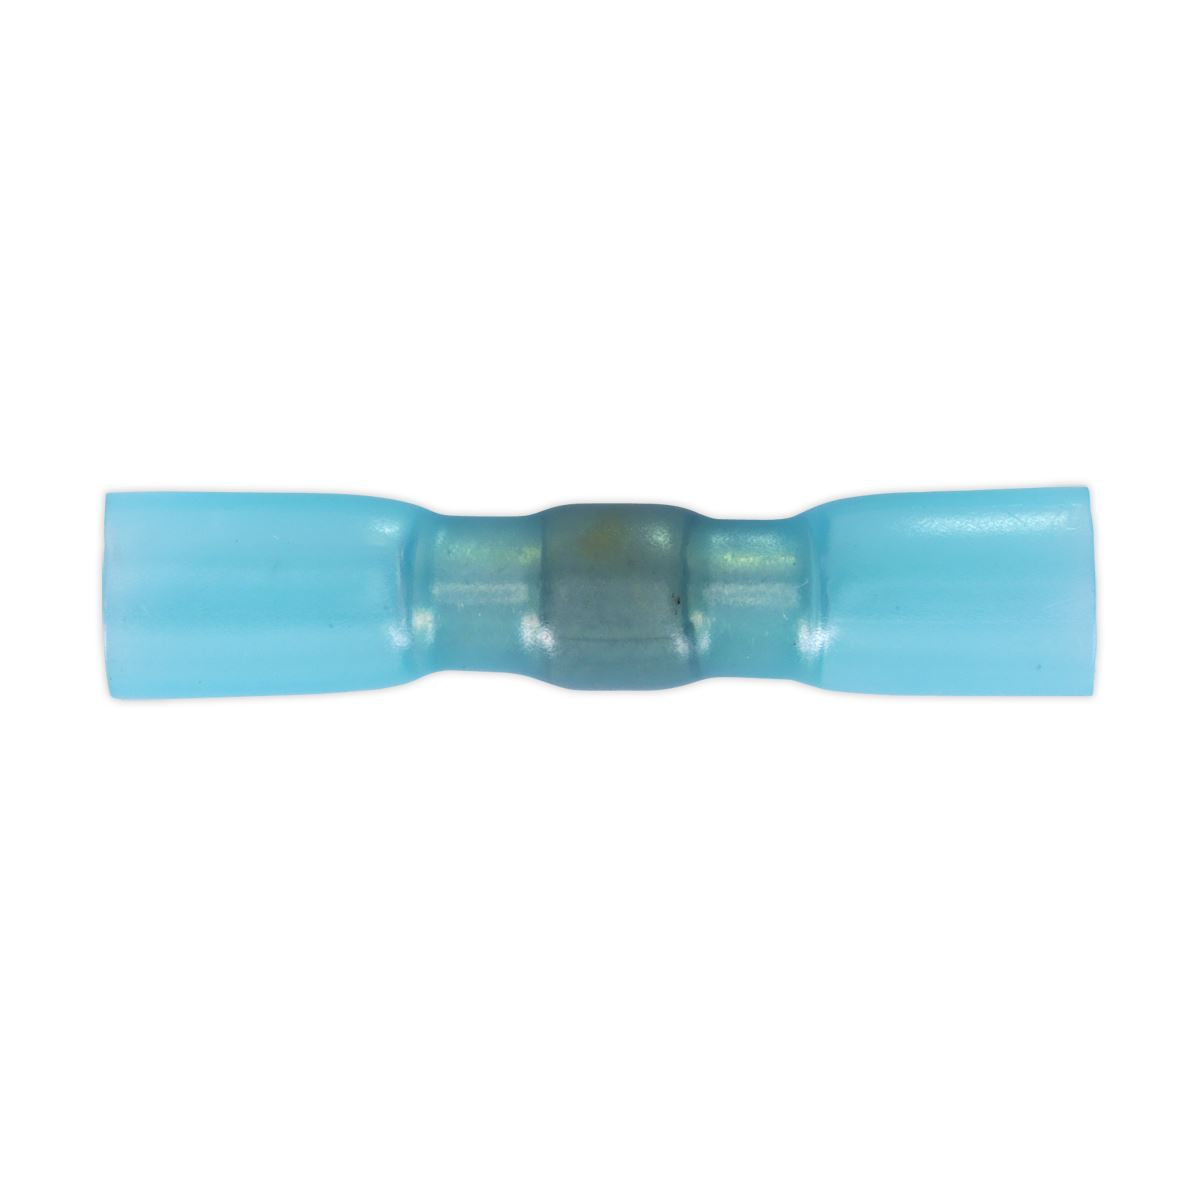 Sealey Heat Shrink Butt Connector with Crimp & Solder Blue Pack of 25